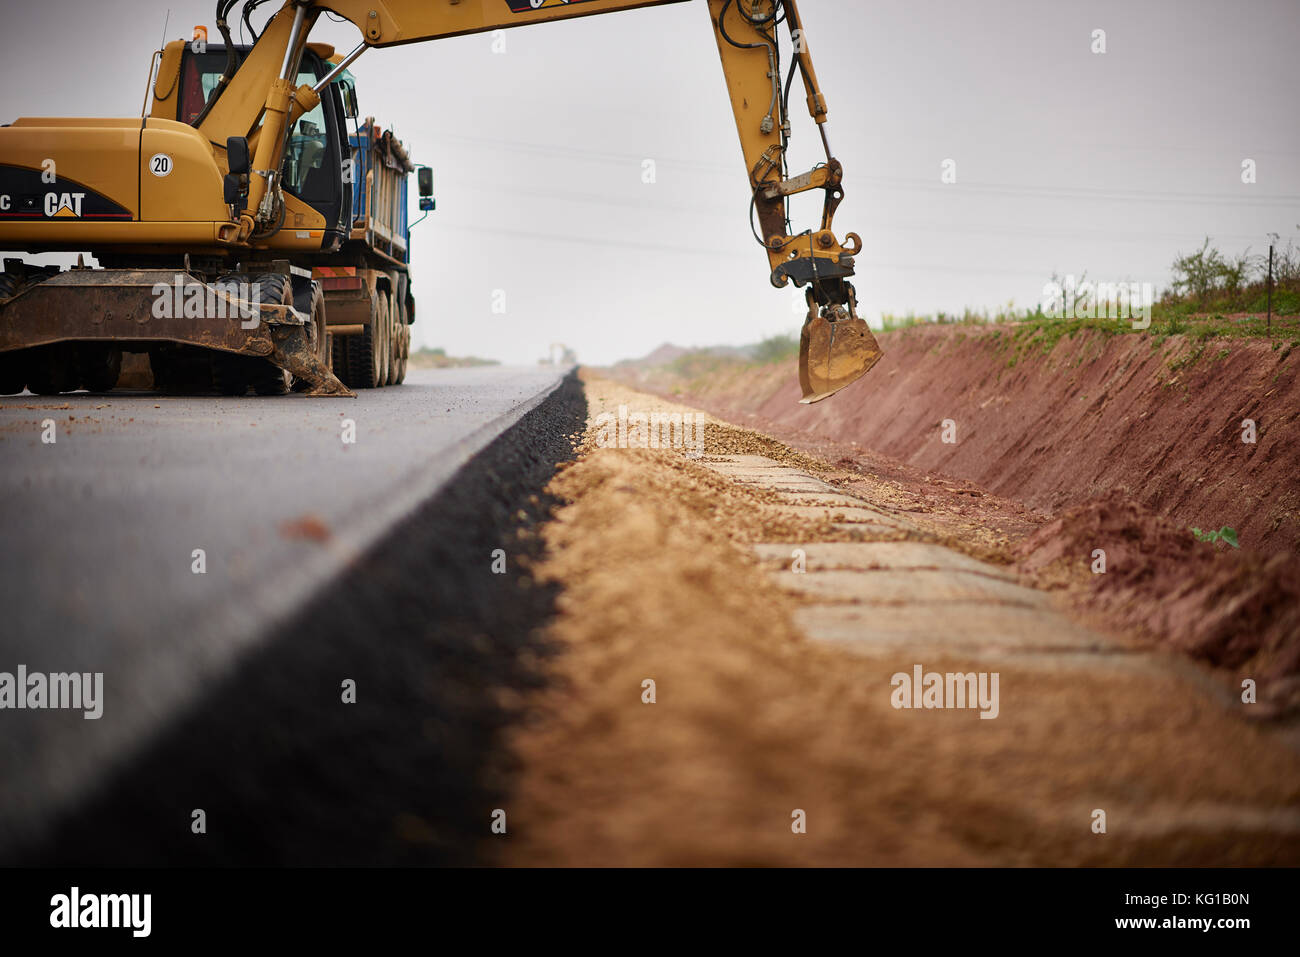 Road construction, asphalt paving, roadside hardening, excavator working on road construction Stock Photo